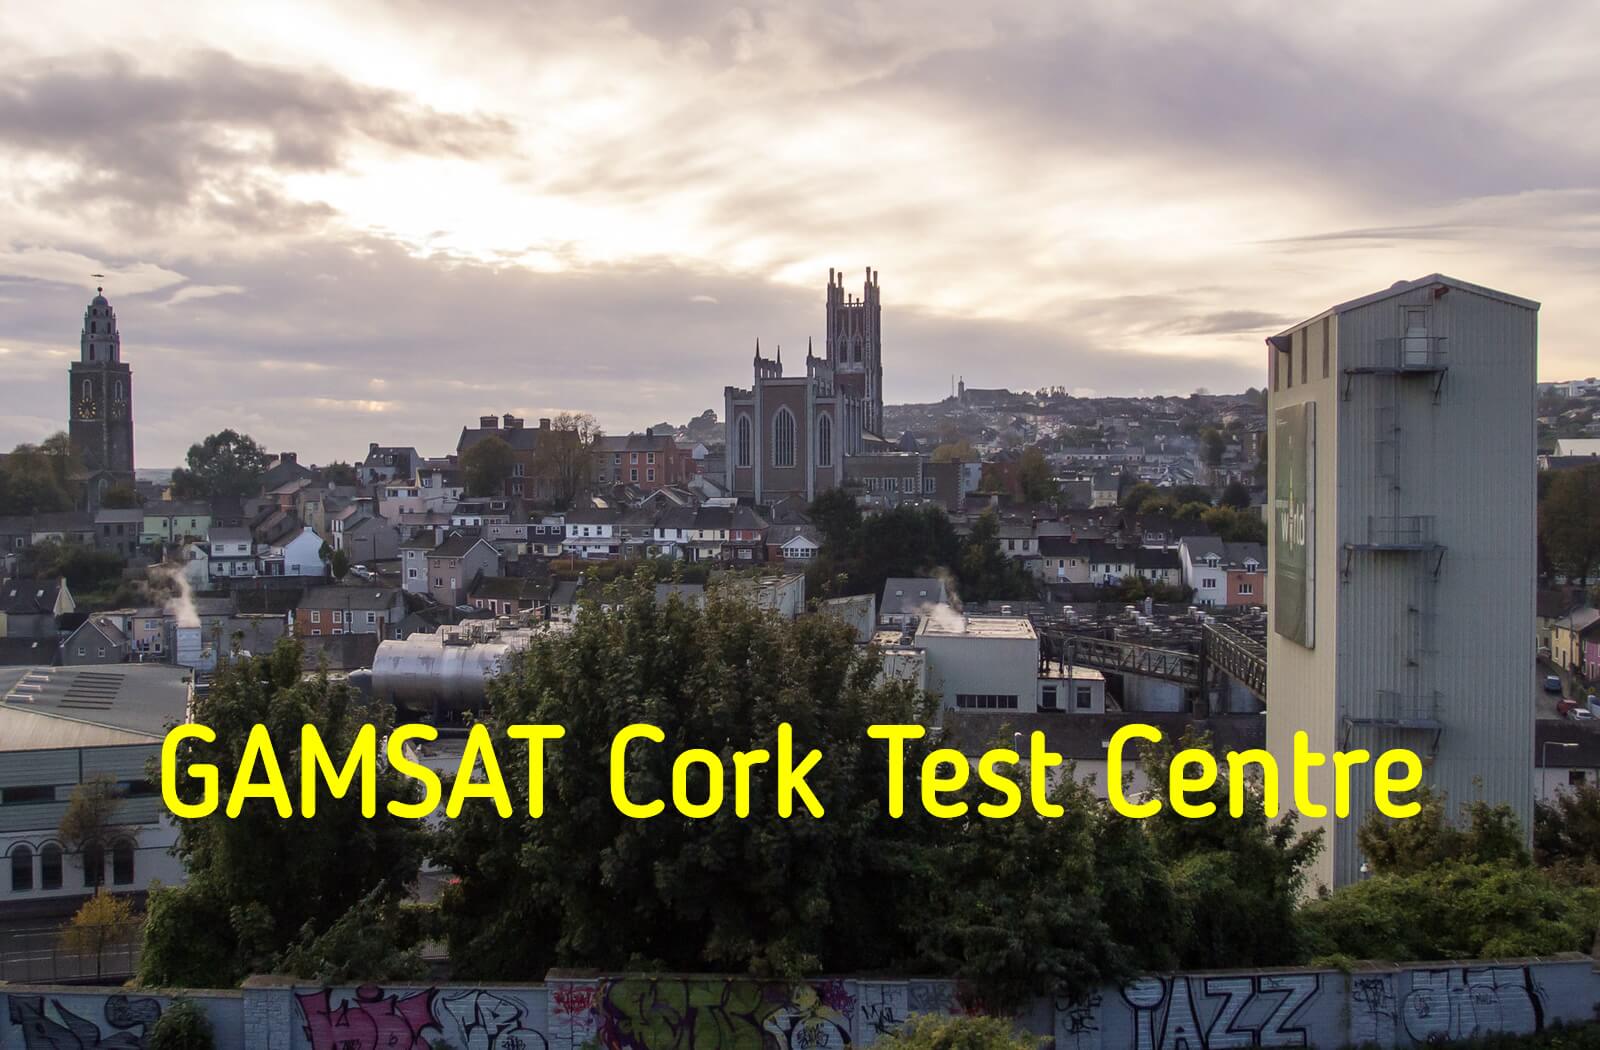 Where is GAMSAT held in Cork?